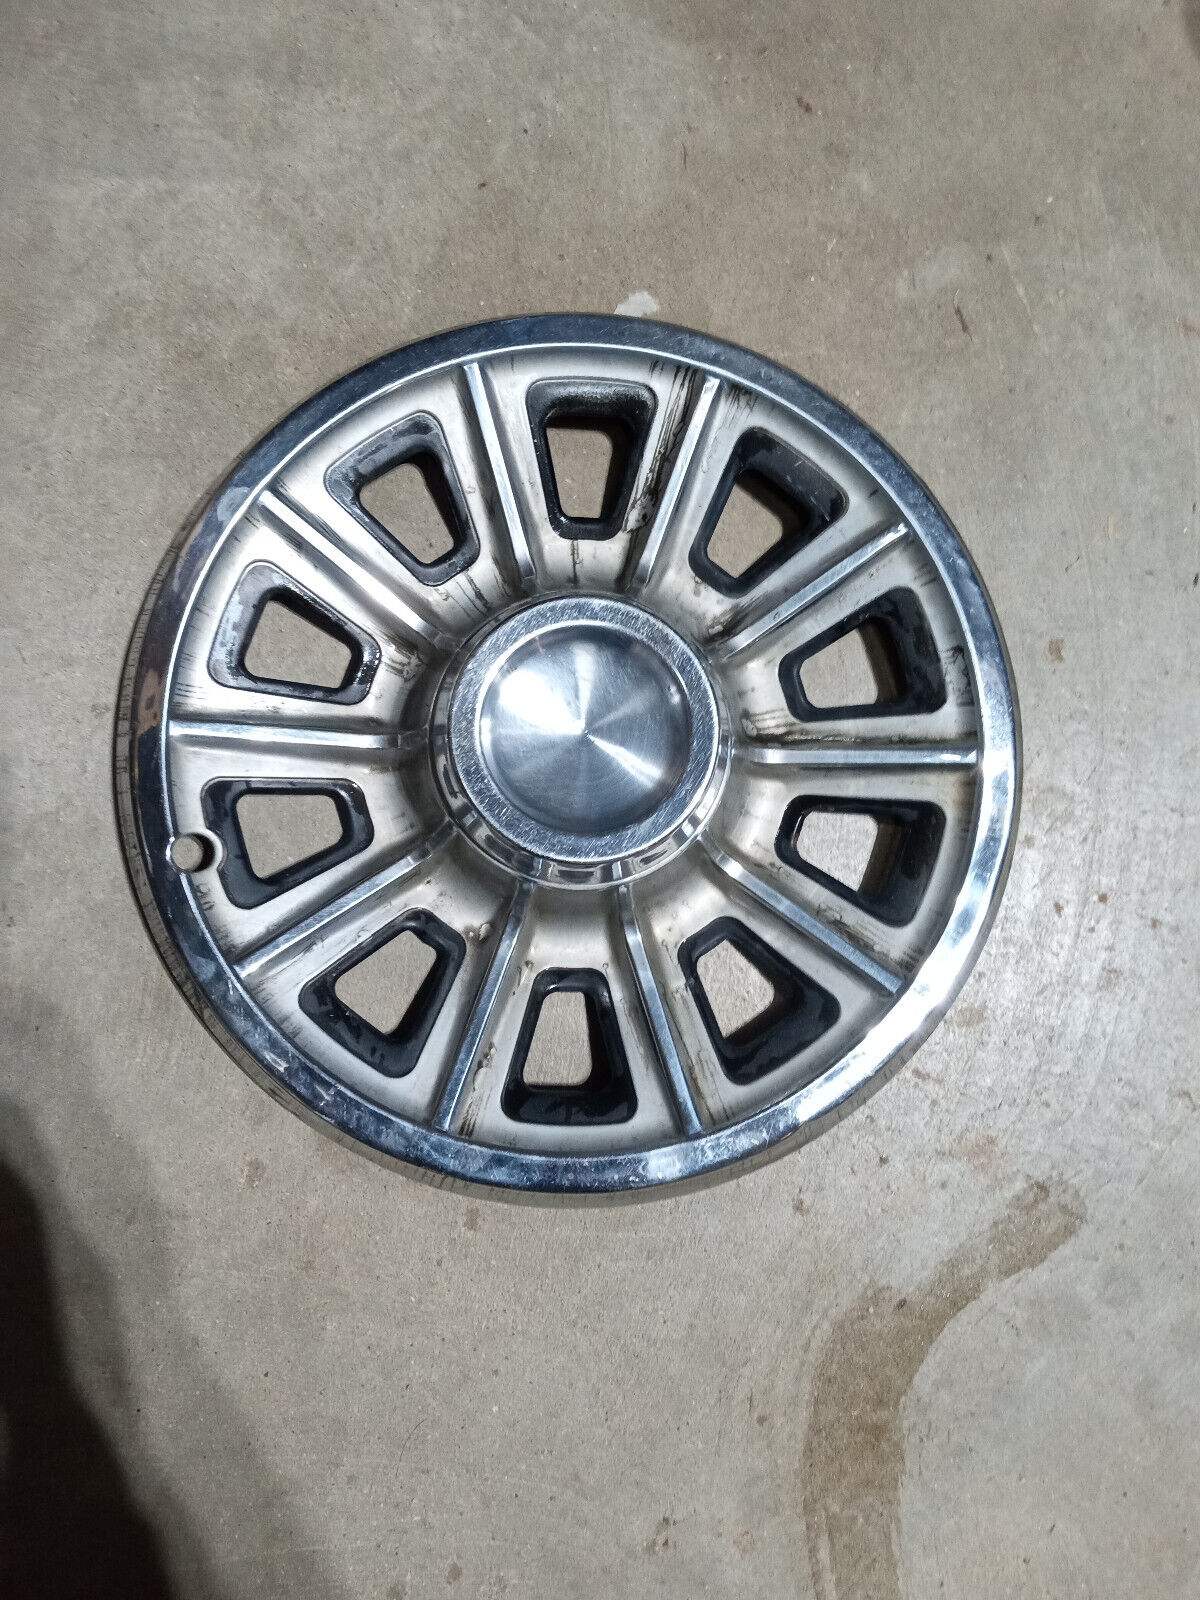 1966 Pontiac Tempest 14 inch hubcap wheel cover